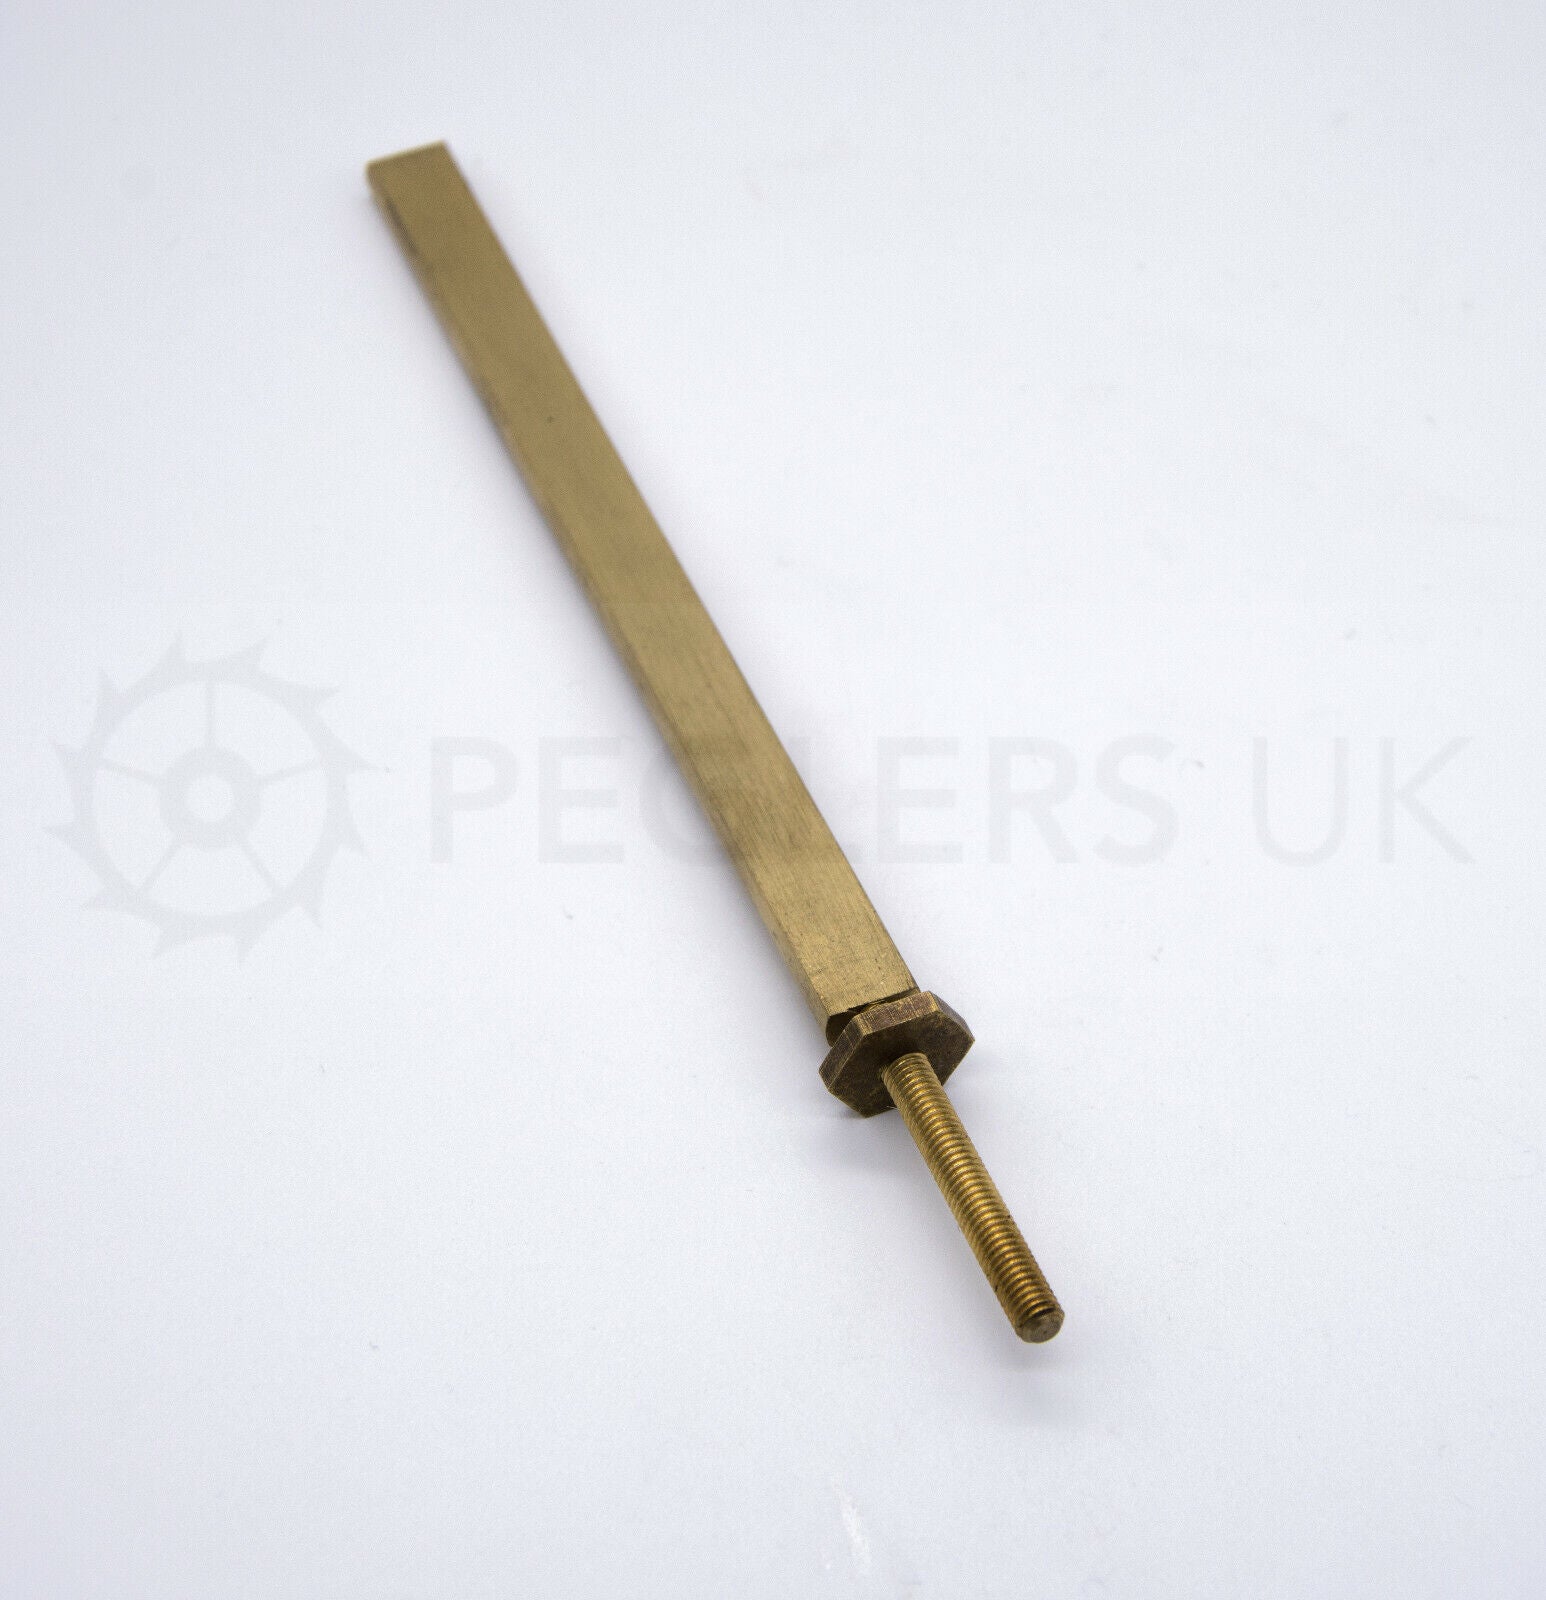 Longcase Pendulum Flat & Nut - Brass with Hexagonal Nut